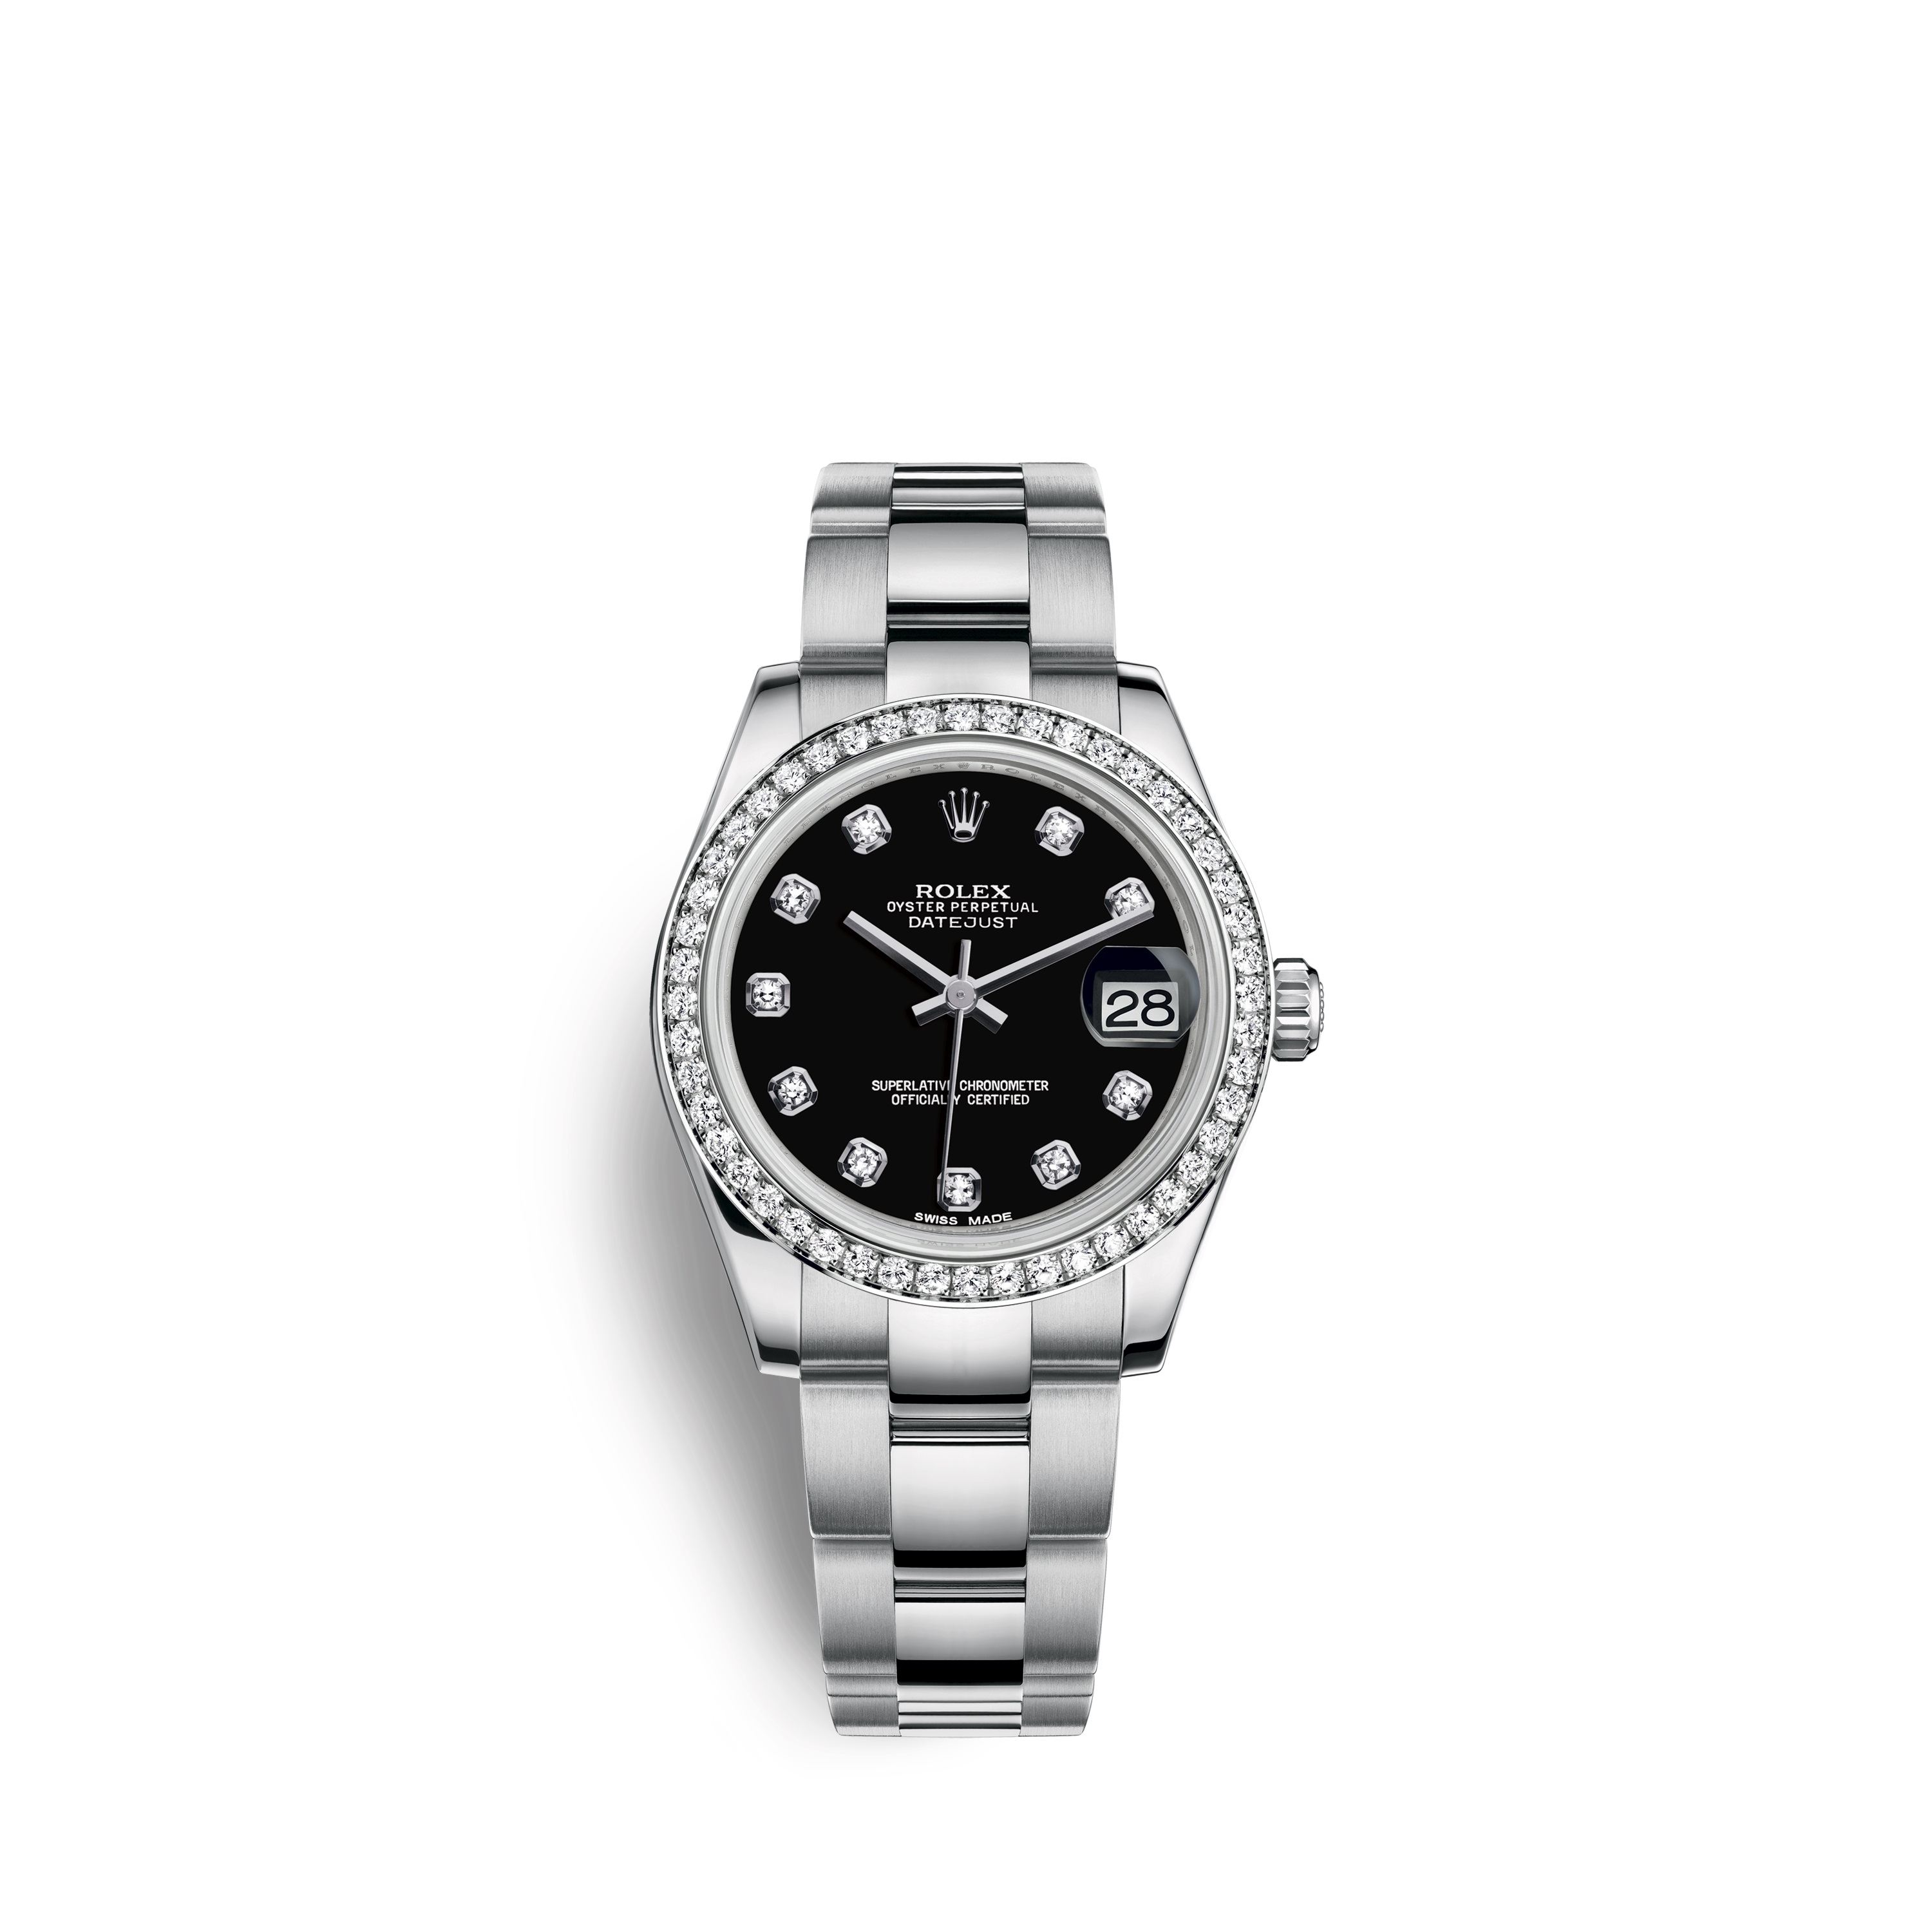 Datejust 31 178384 White Gold & Diamonds Watch (Black Set with Diamonds)